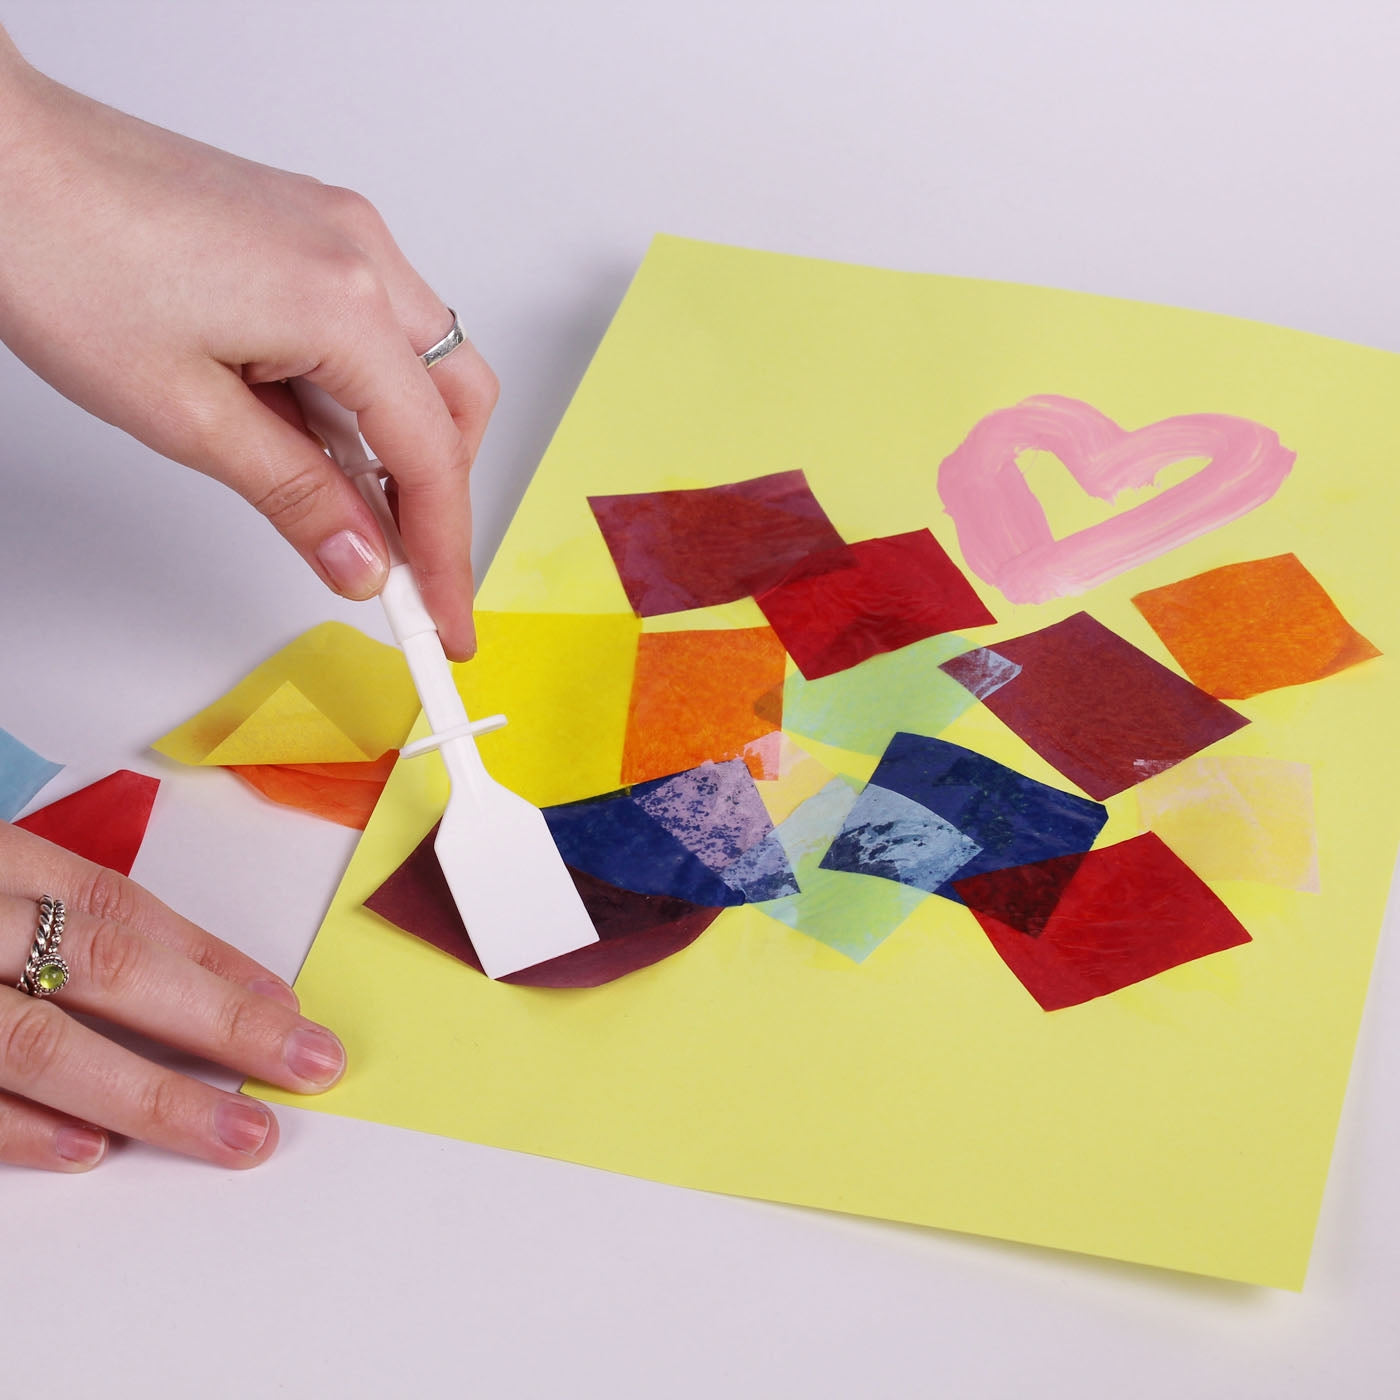 coloured tissue paper